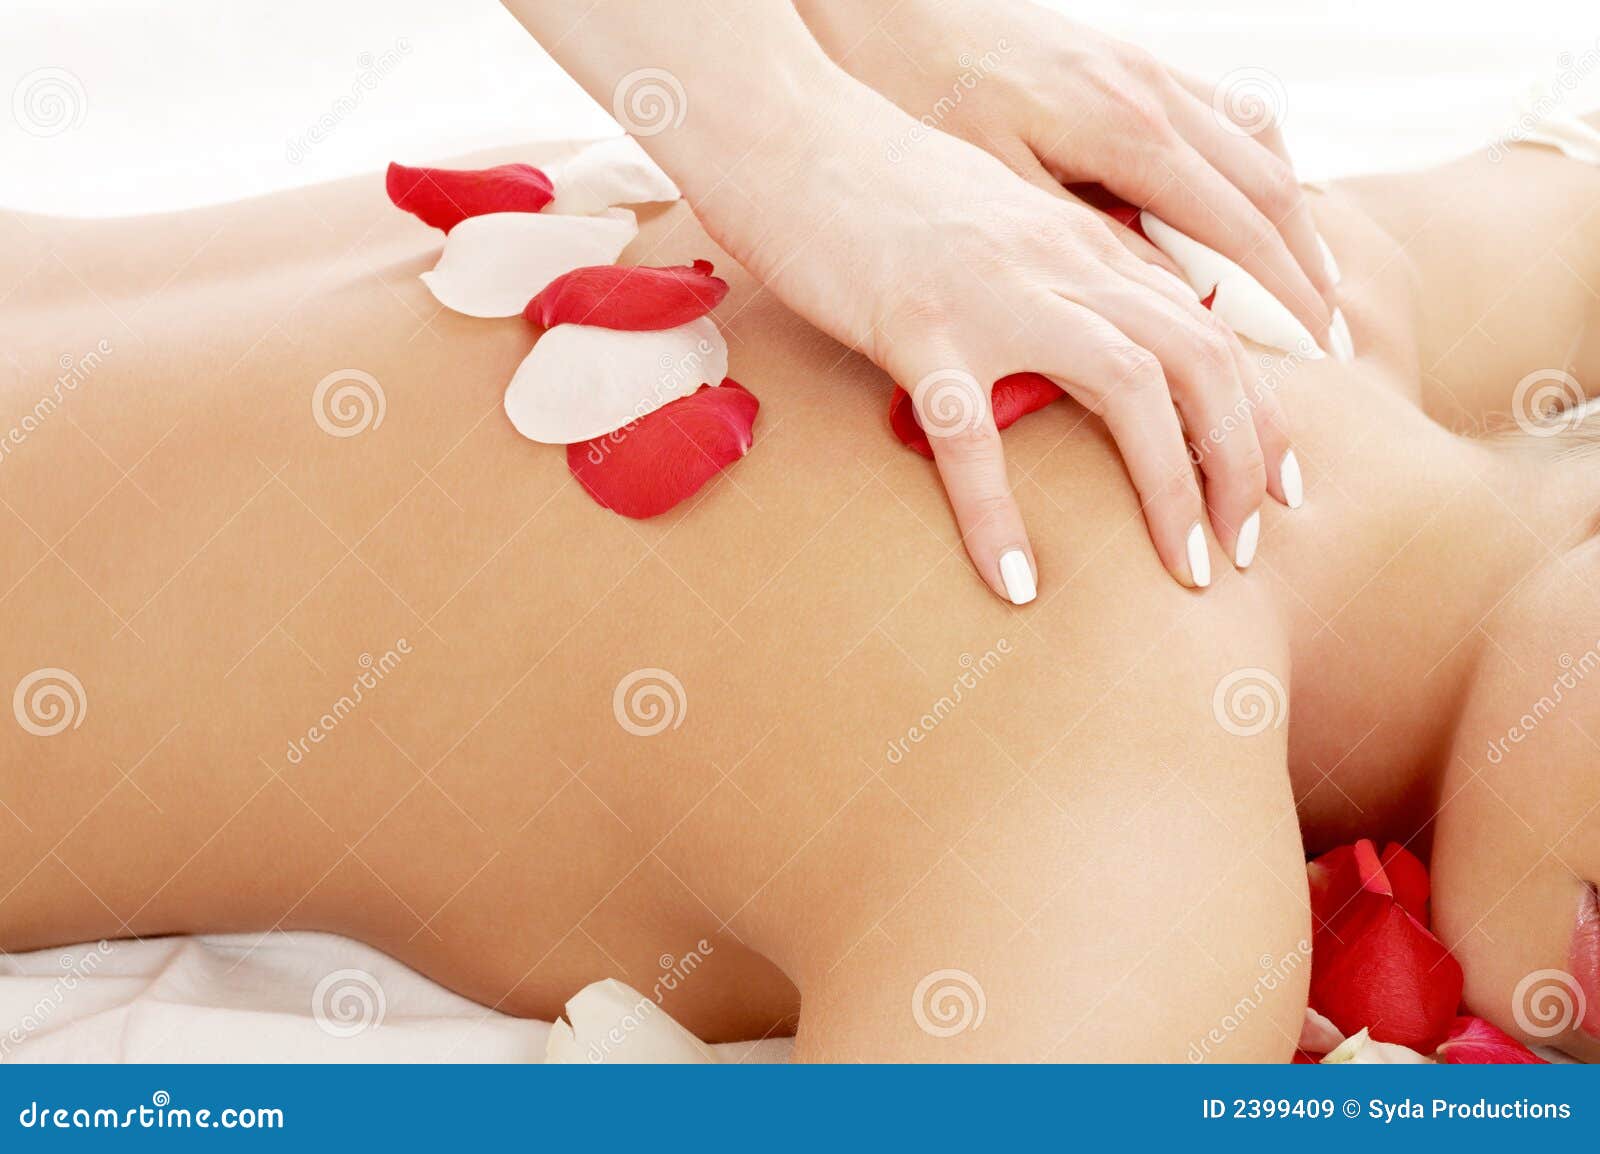 Found Spa Massage Regina Rose Parlors Red Kelie